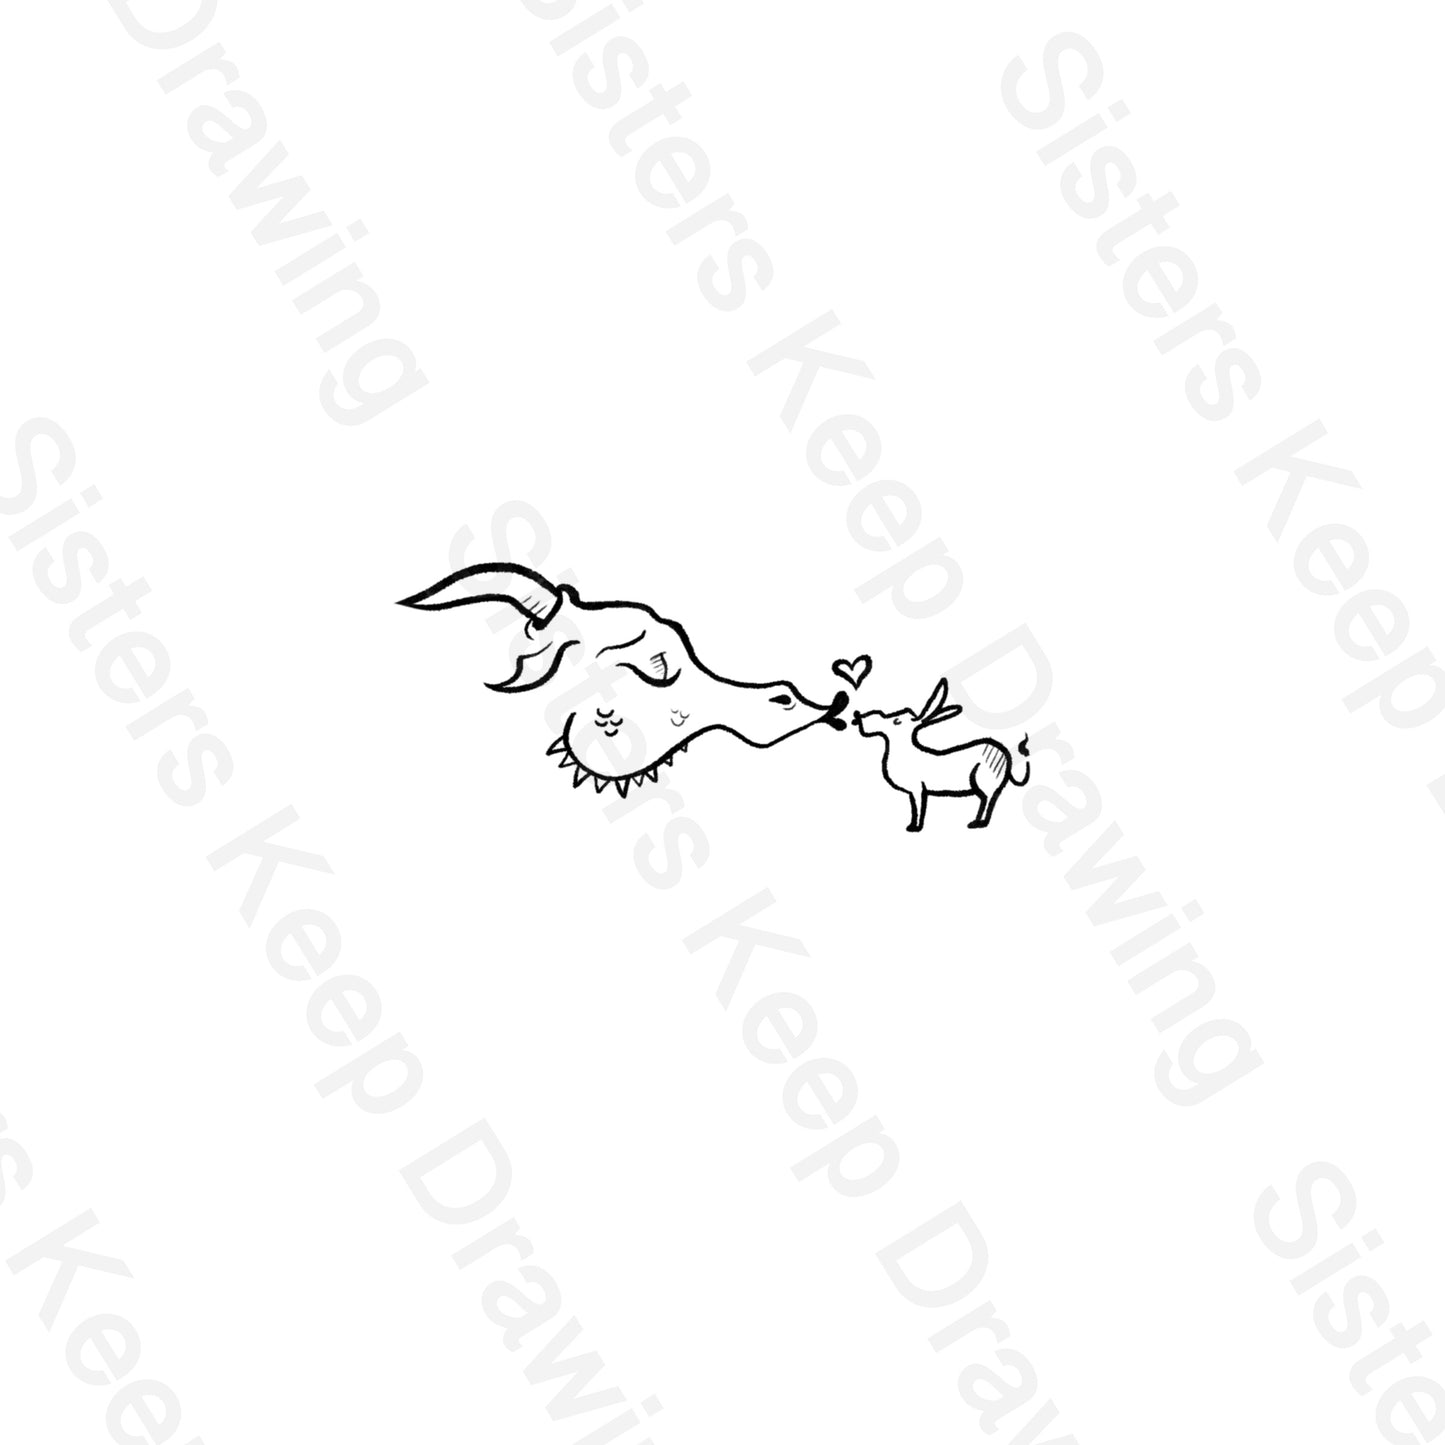 Shrek Donky and Dragon Kiss Tattoo Transparent Permission PNG- instant download digital printable artwork